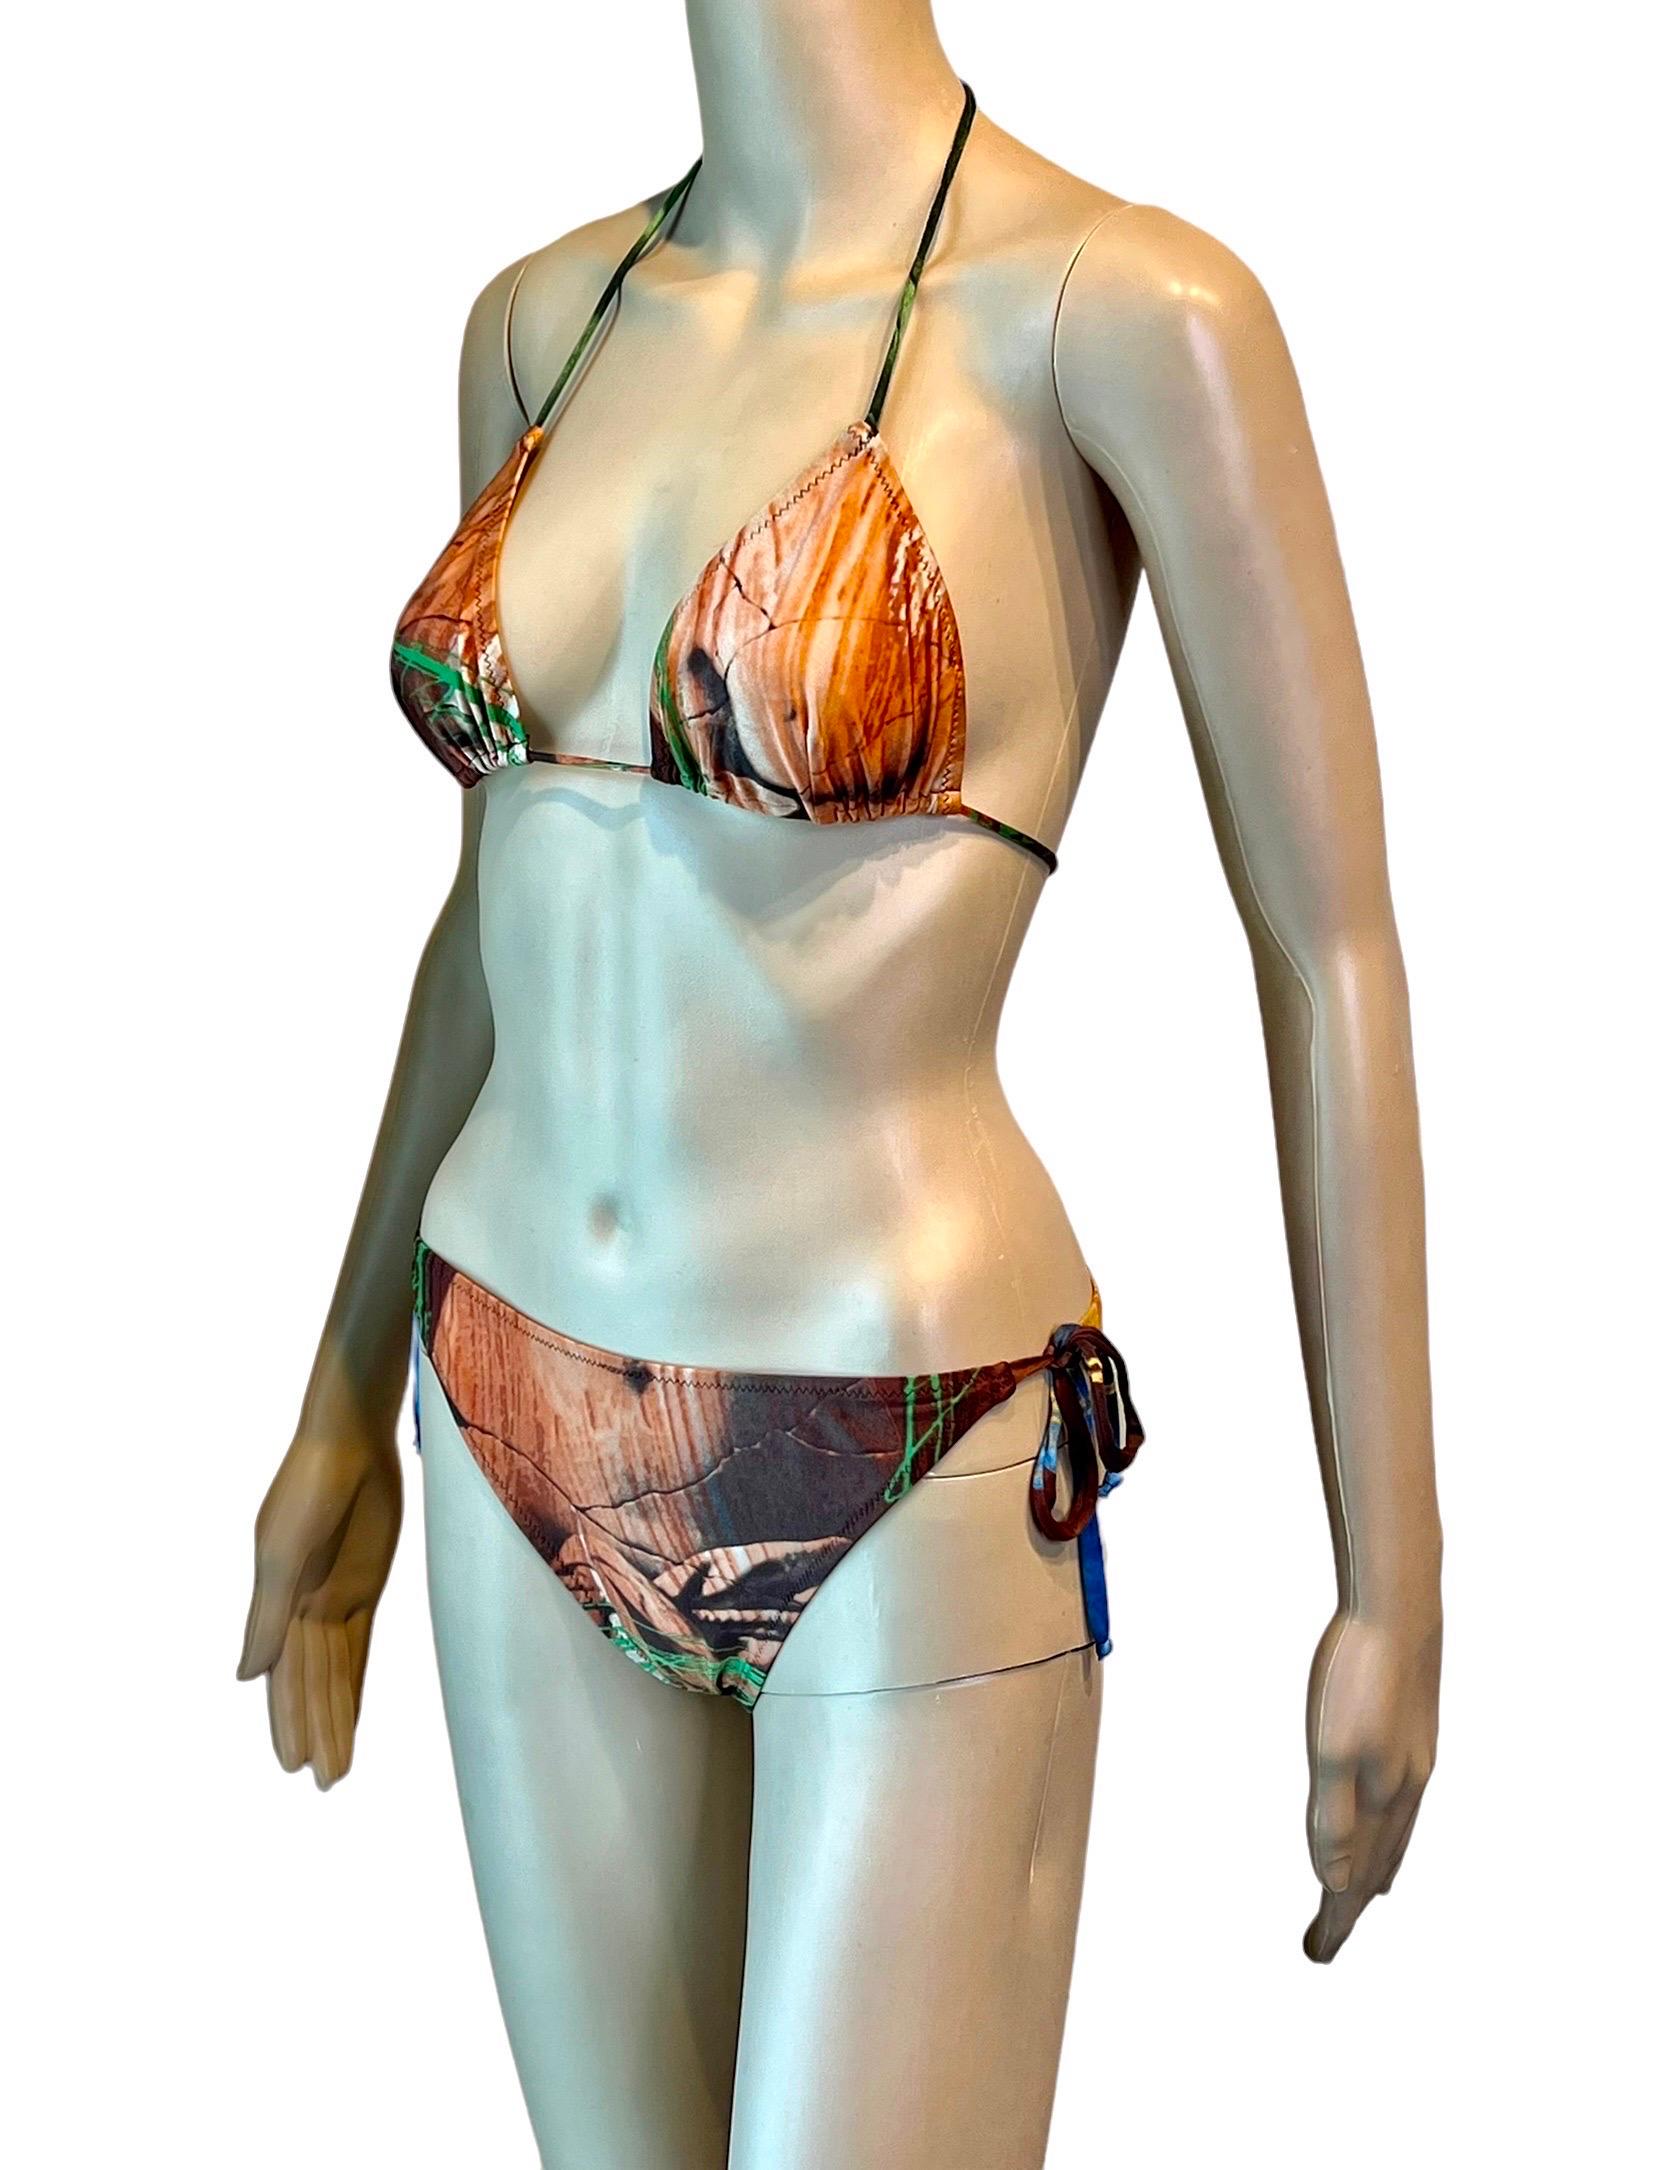 Jean Paul Gaultier S/S 1999 Venus de Milo Bikini Swimwear Swimsuit 2 Piece Set Size M

Excellent Condition. 


